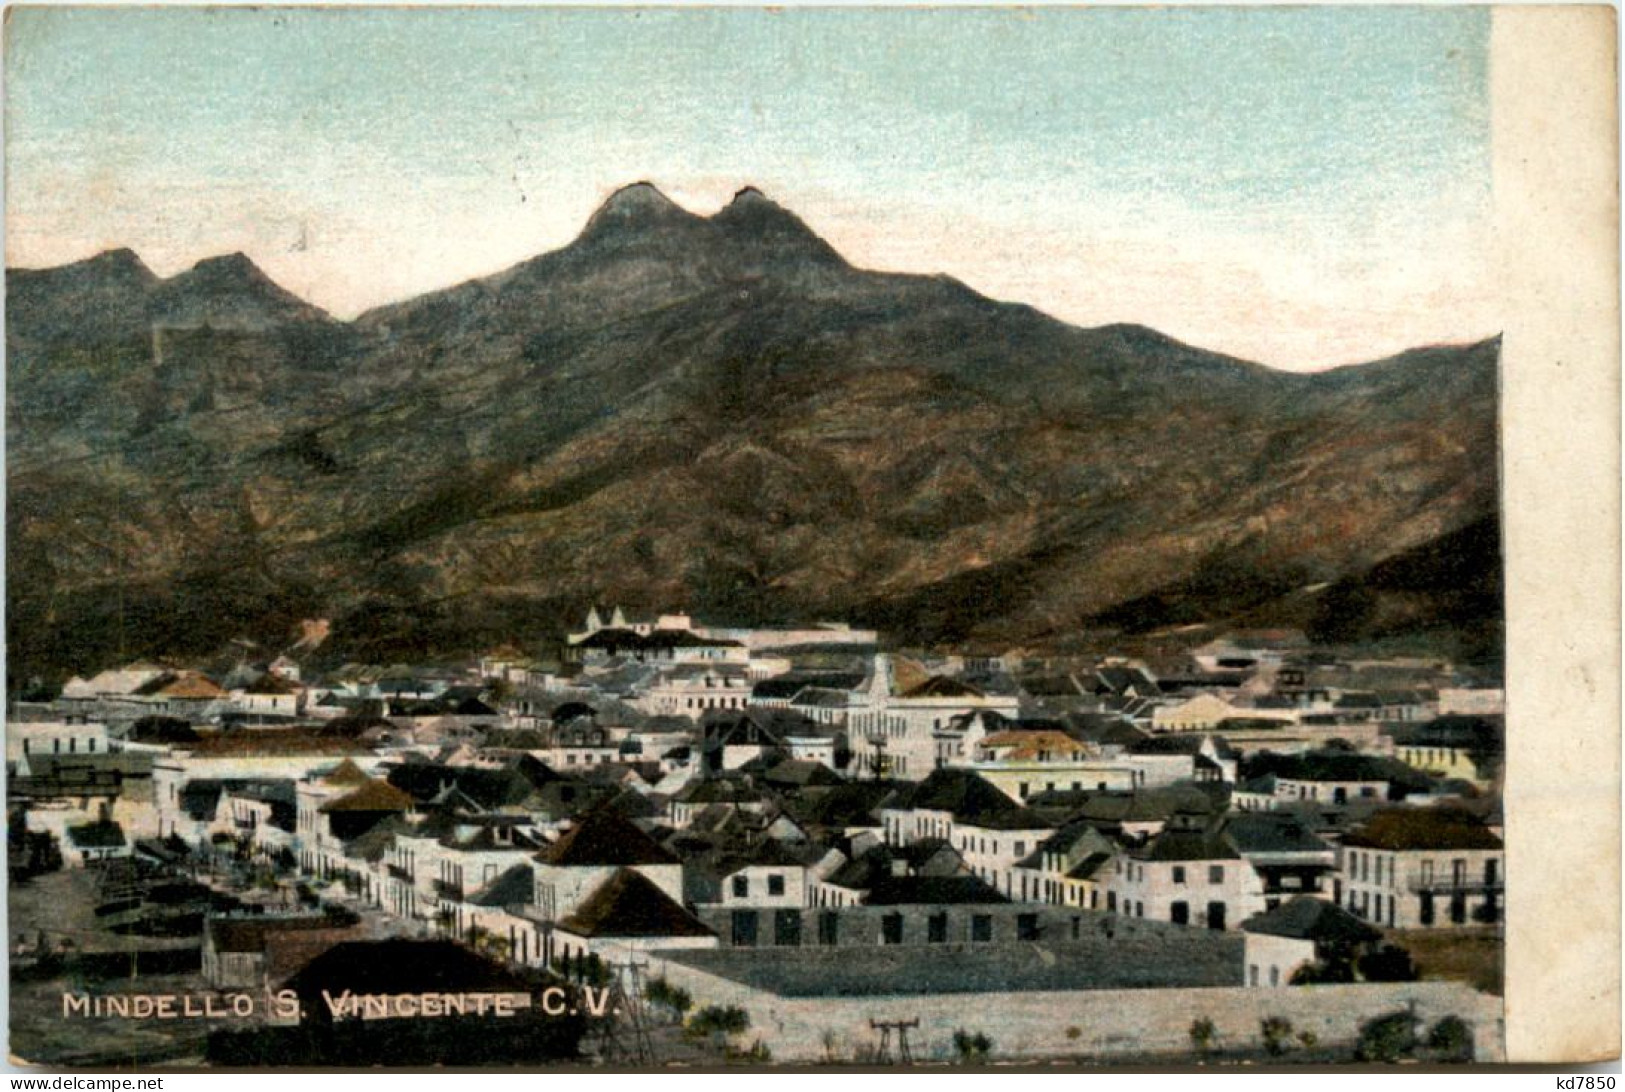 Mindello S. Vincente - Cape Verde